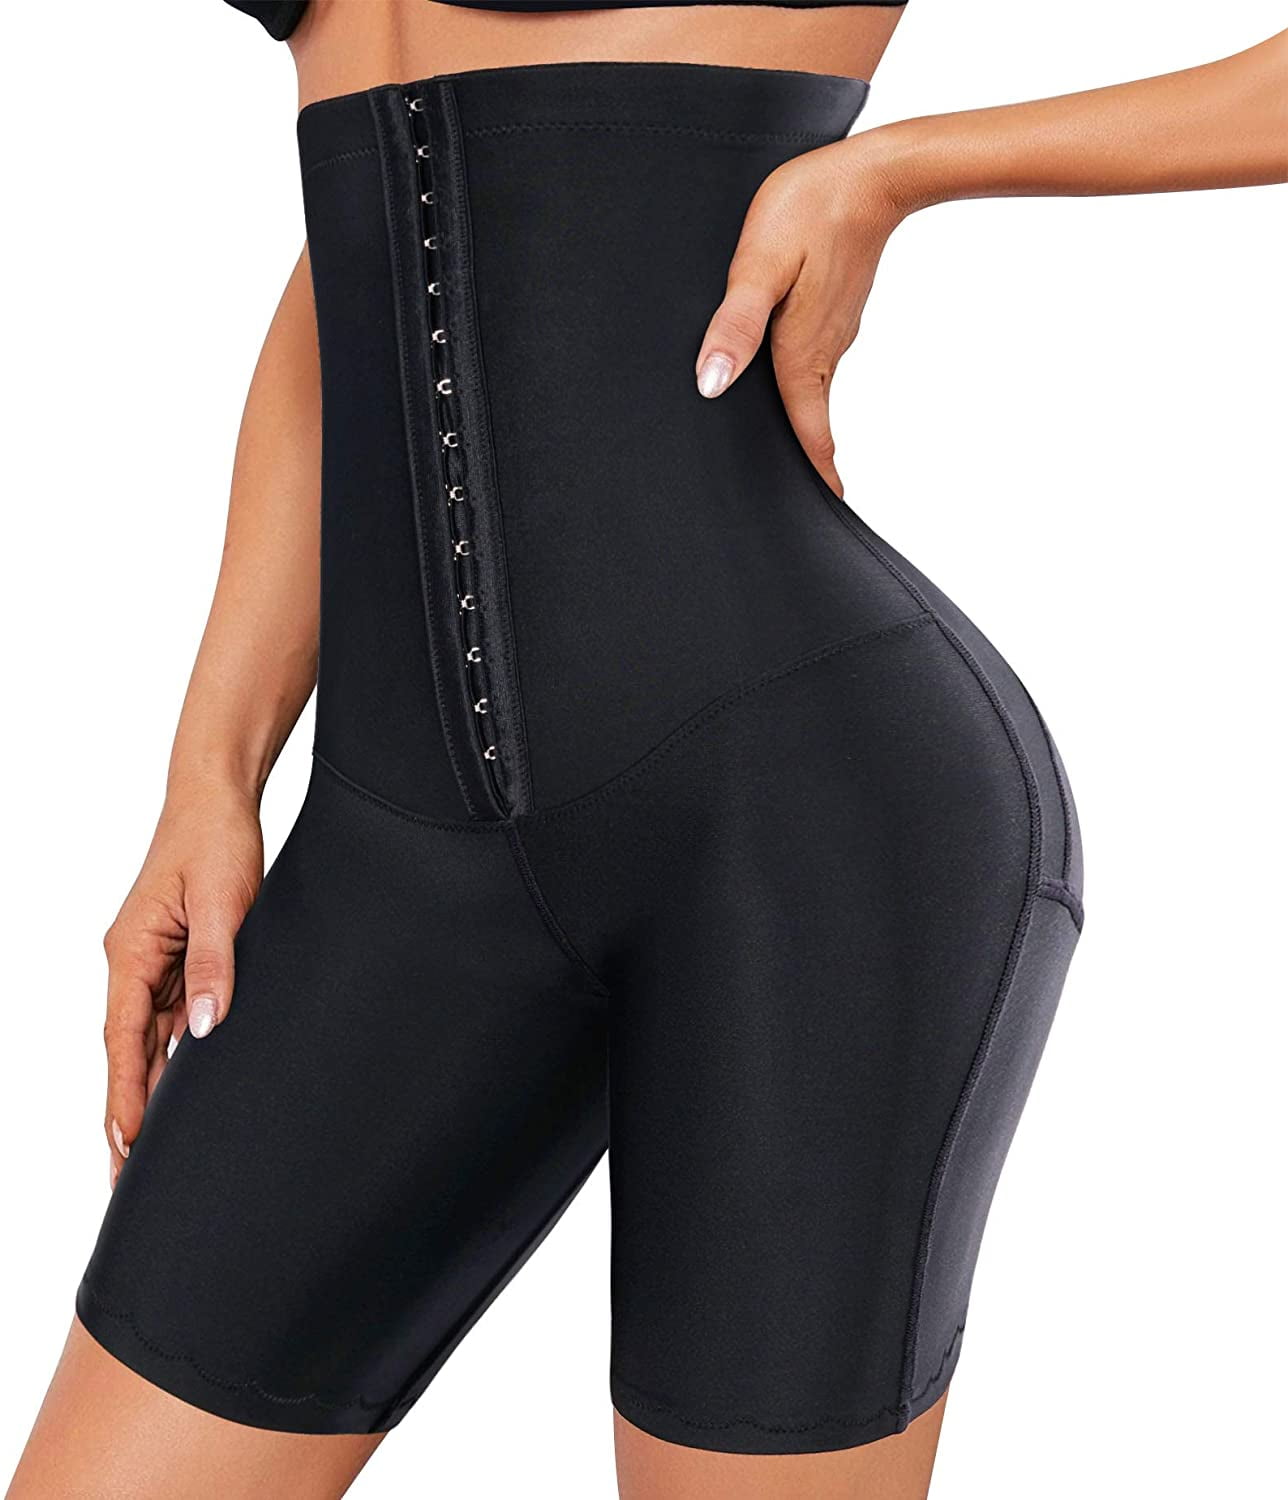 JOSERGO Shapewear for Women Tummy Control Panties Butt Lifter Body Shaper High Waist Trainer Thigh Slimmer Shorts 